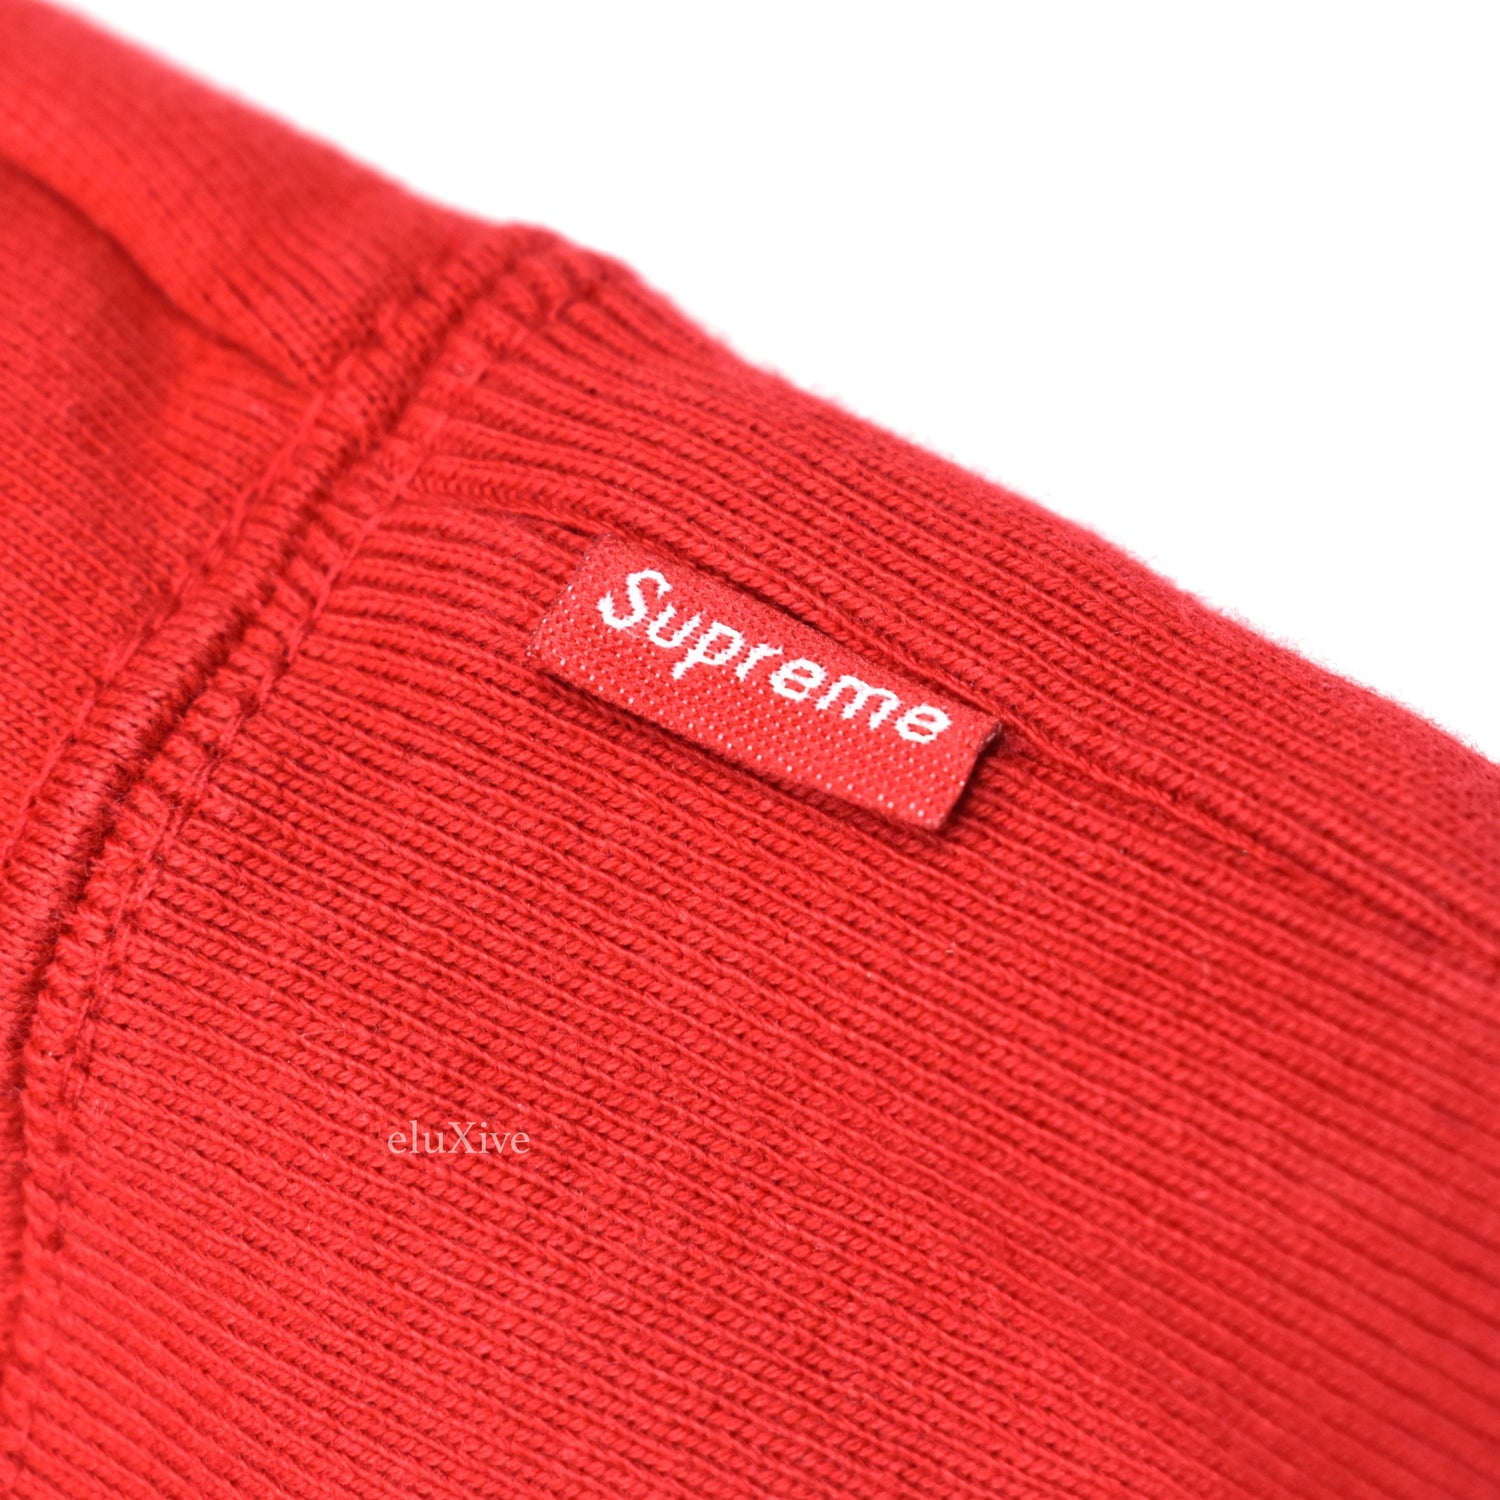 red supreme sweatshirt